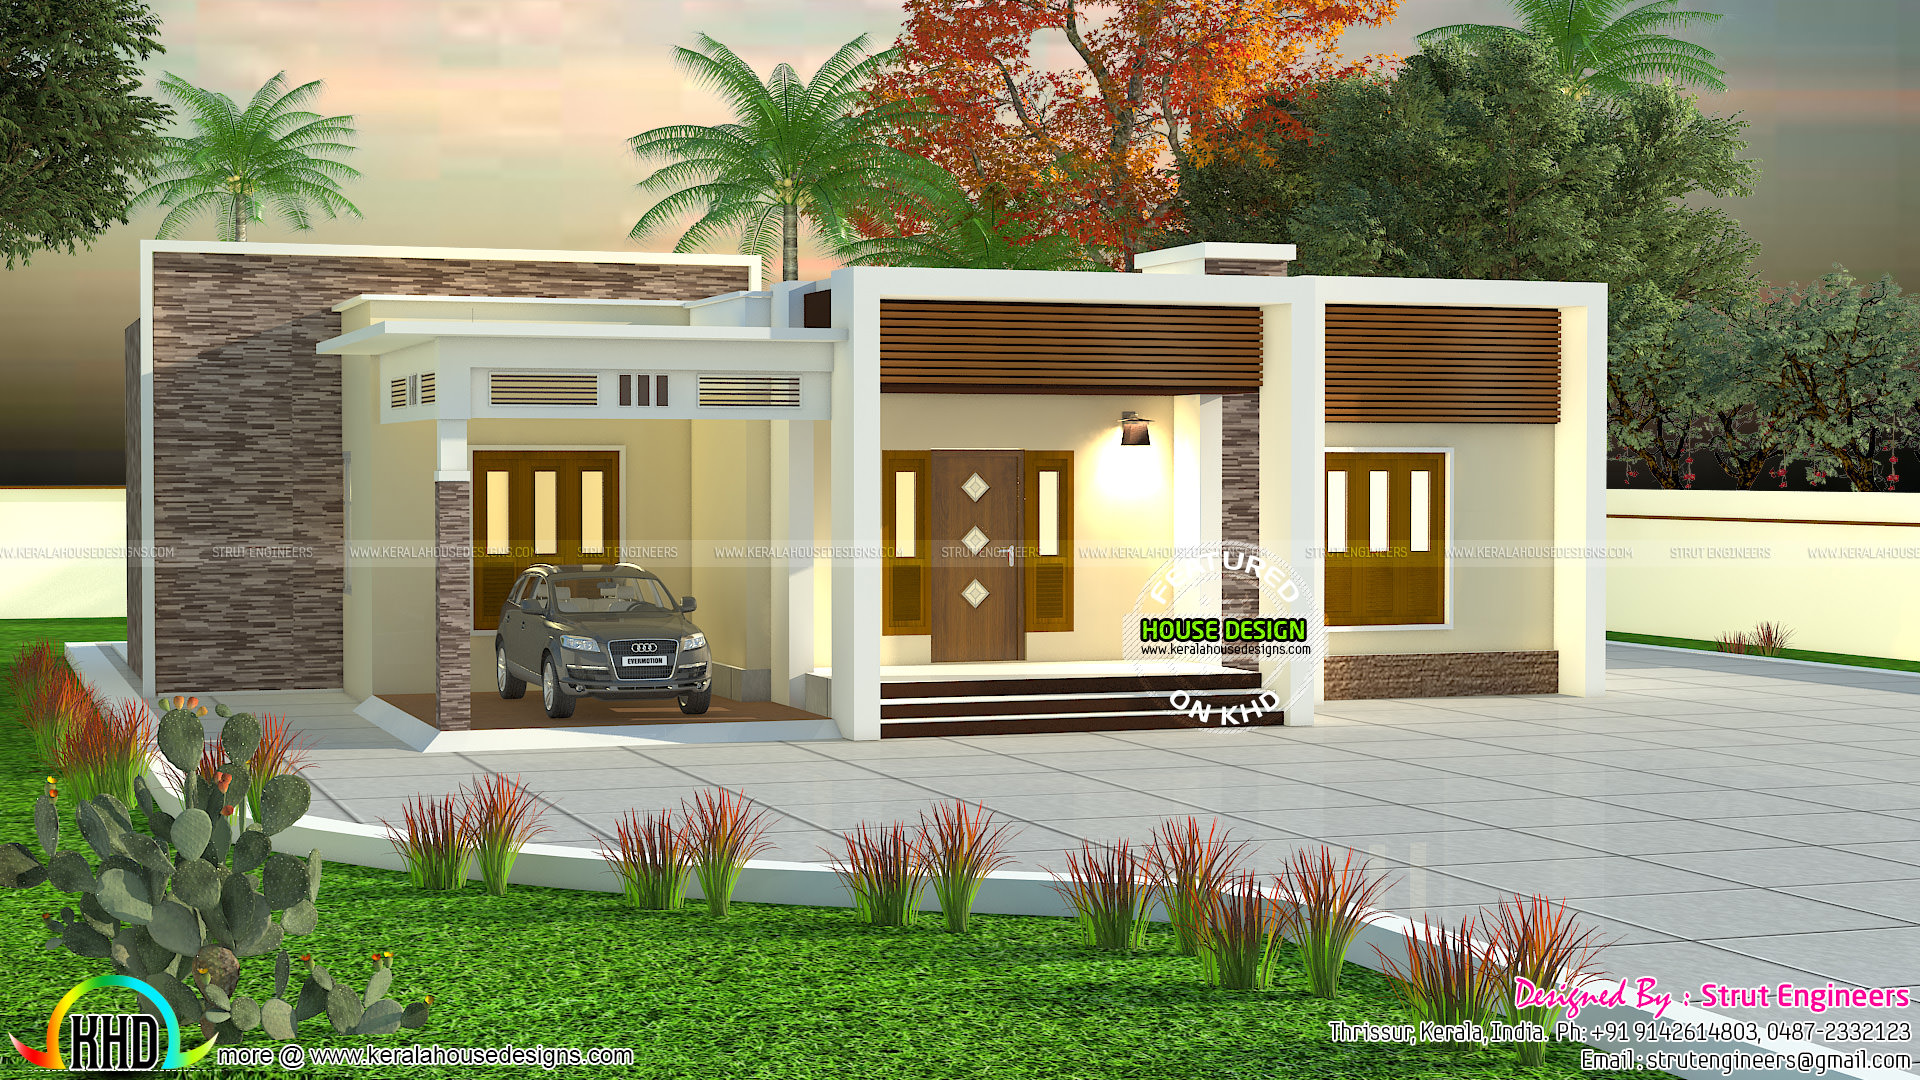  900  sq  ft  2  BHK flat roof house  Kerala  home  design  